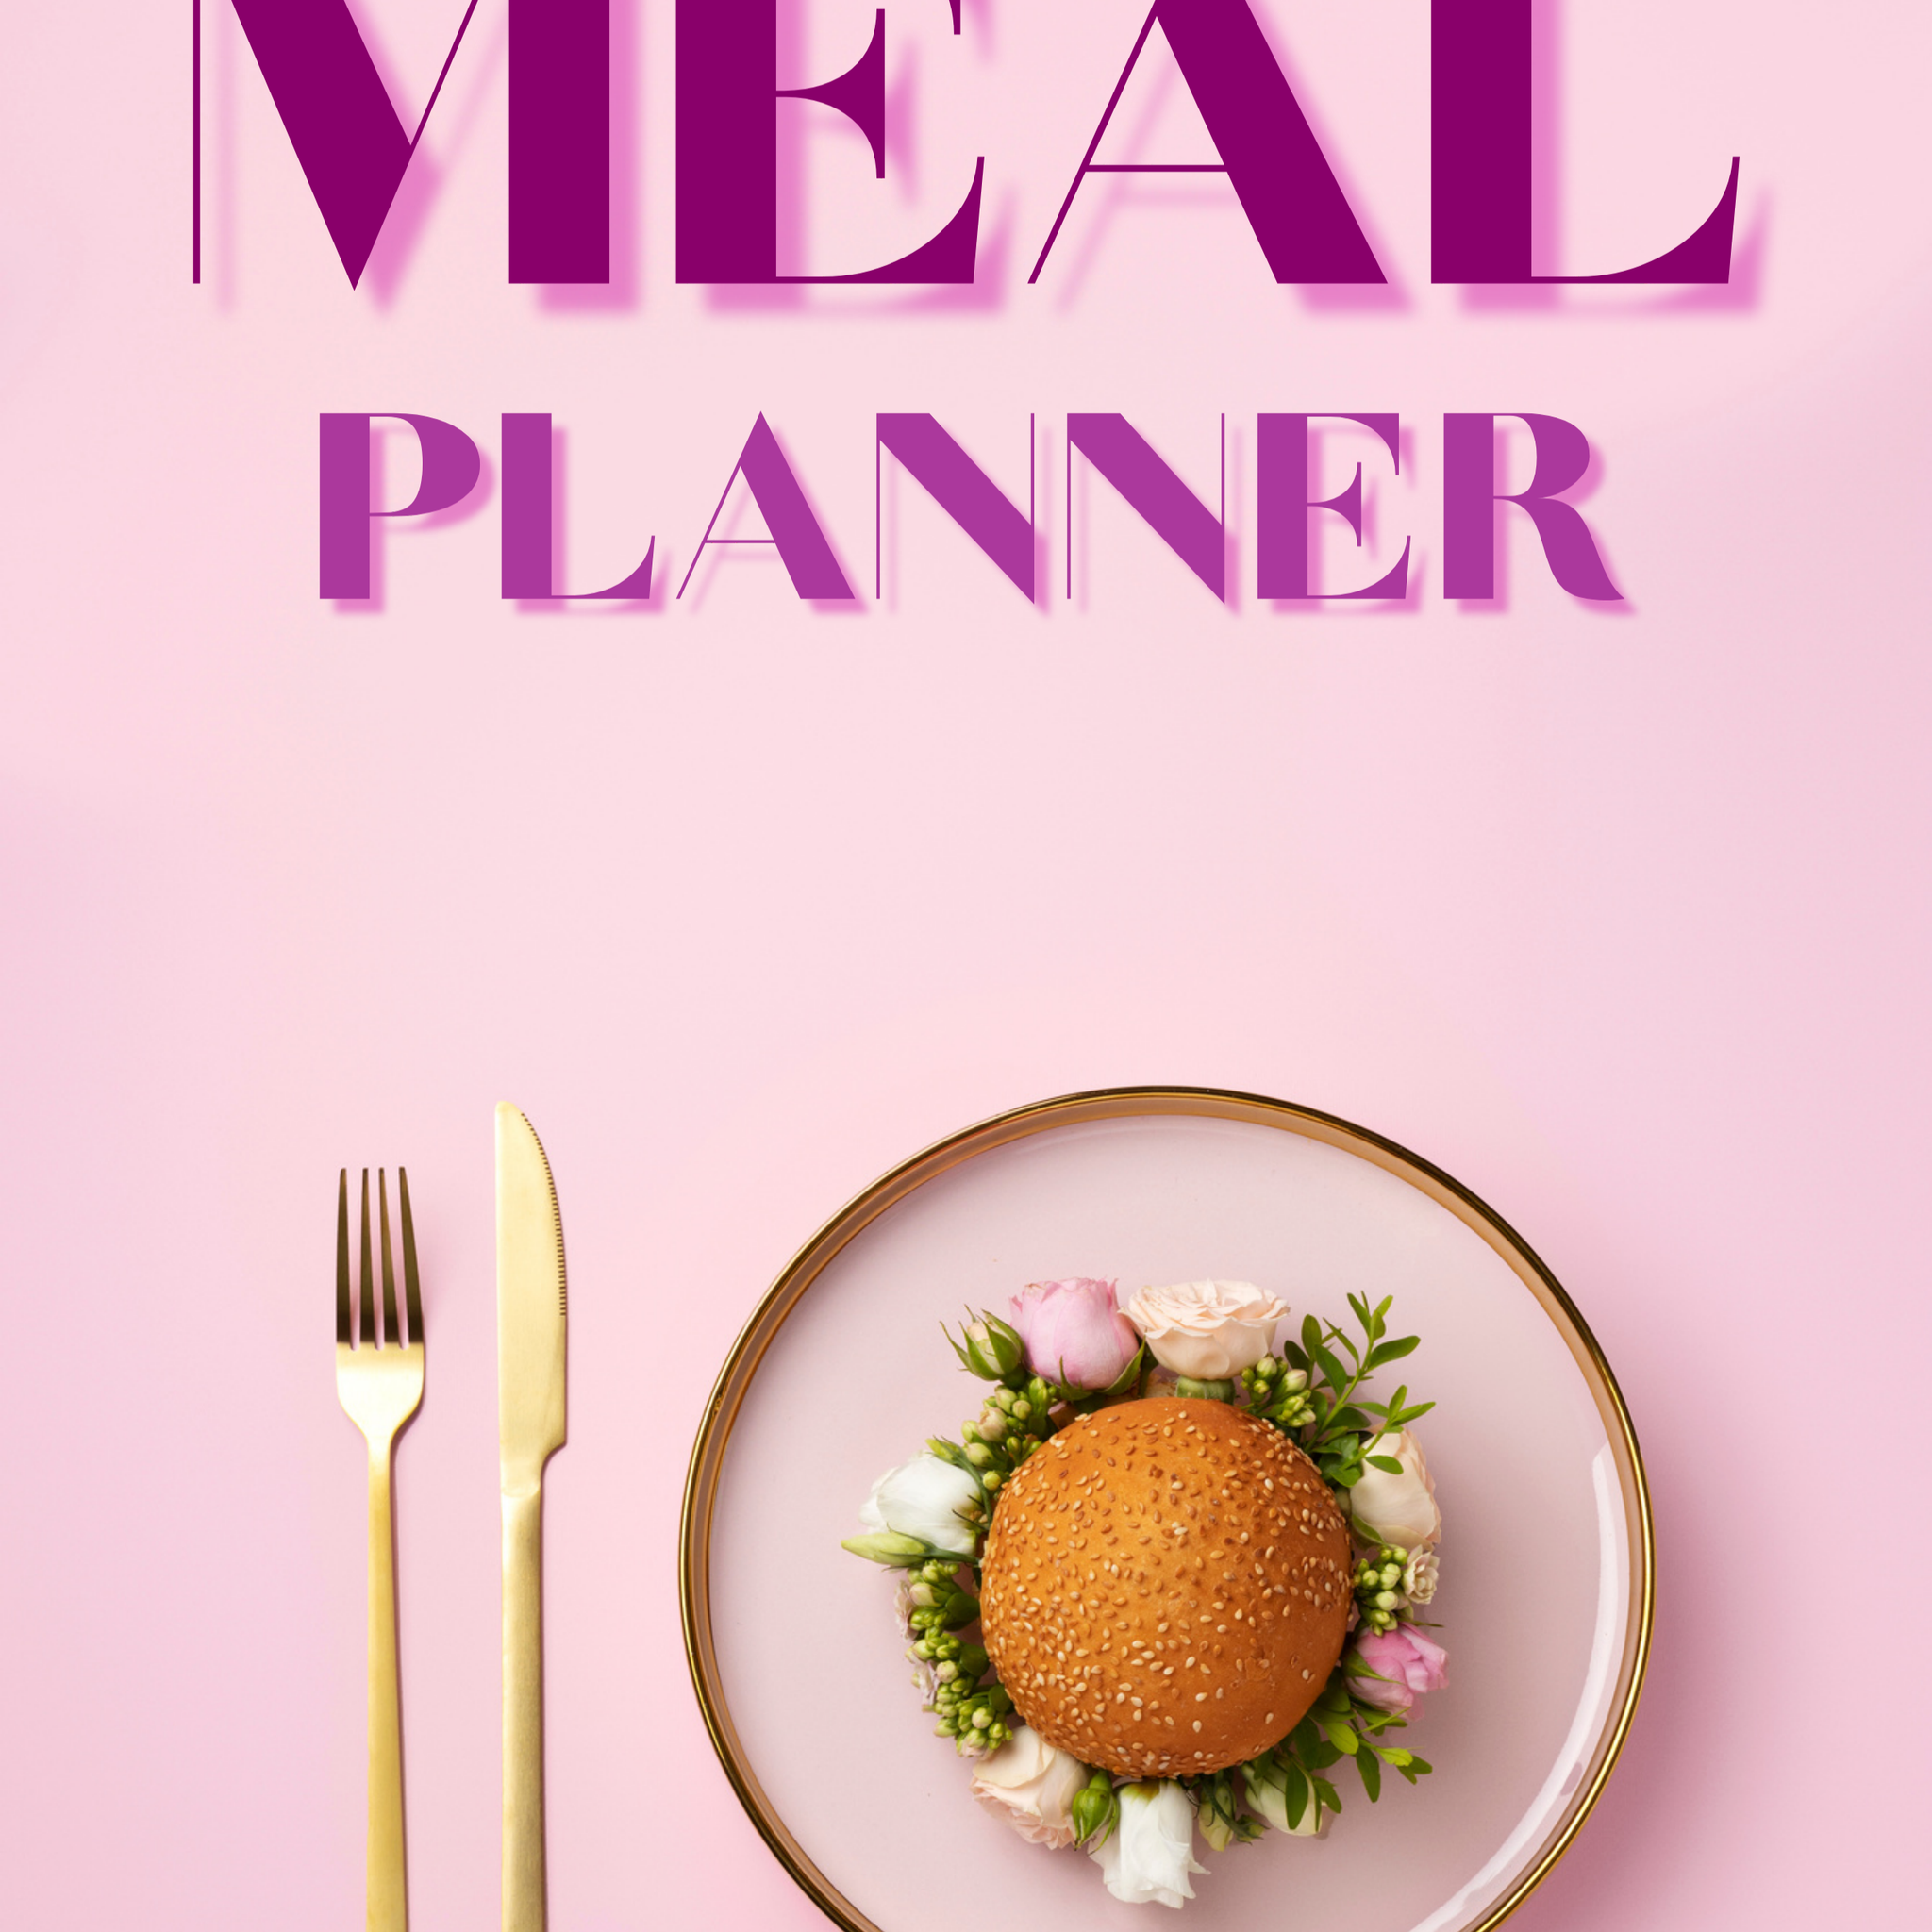 Best Meal Planner